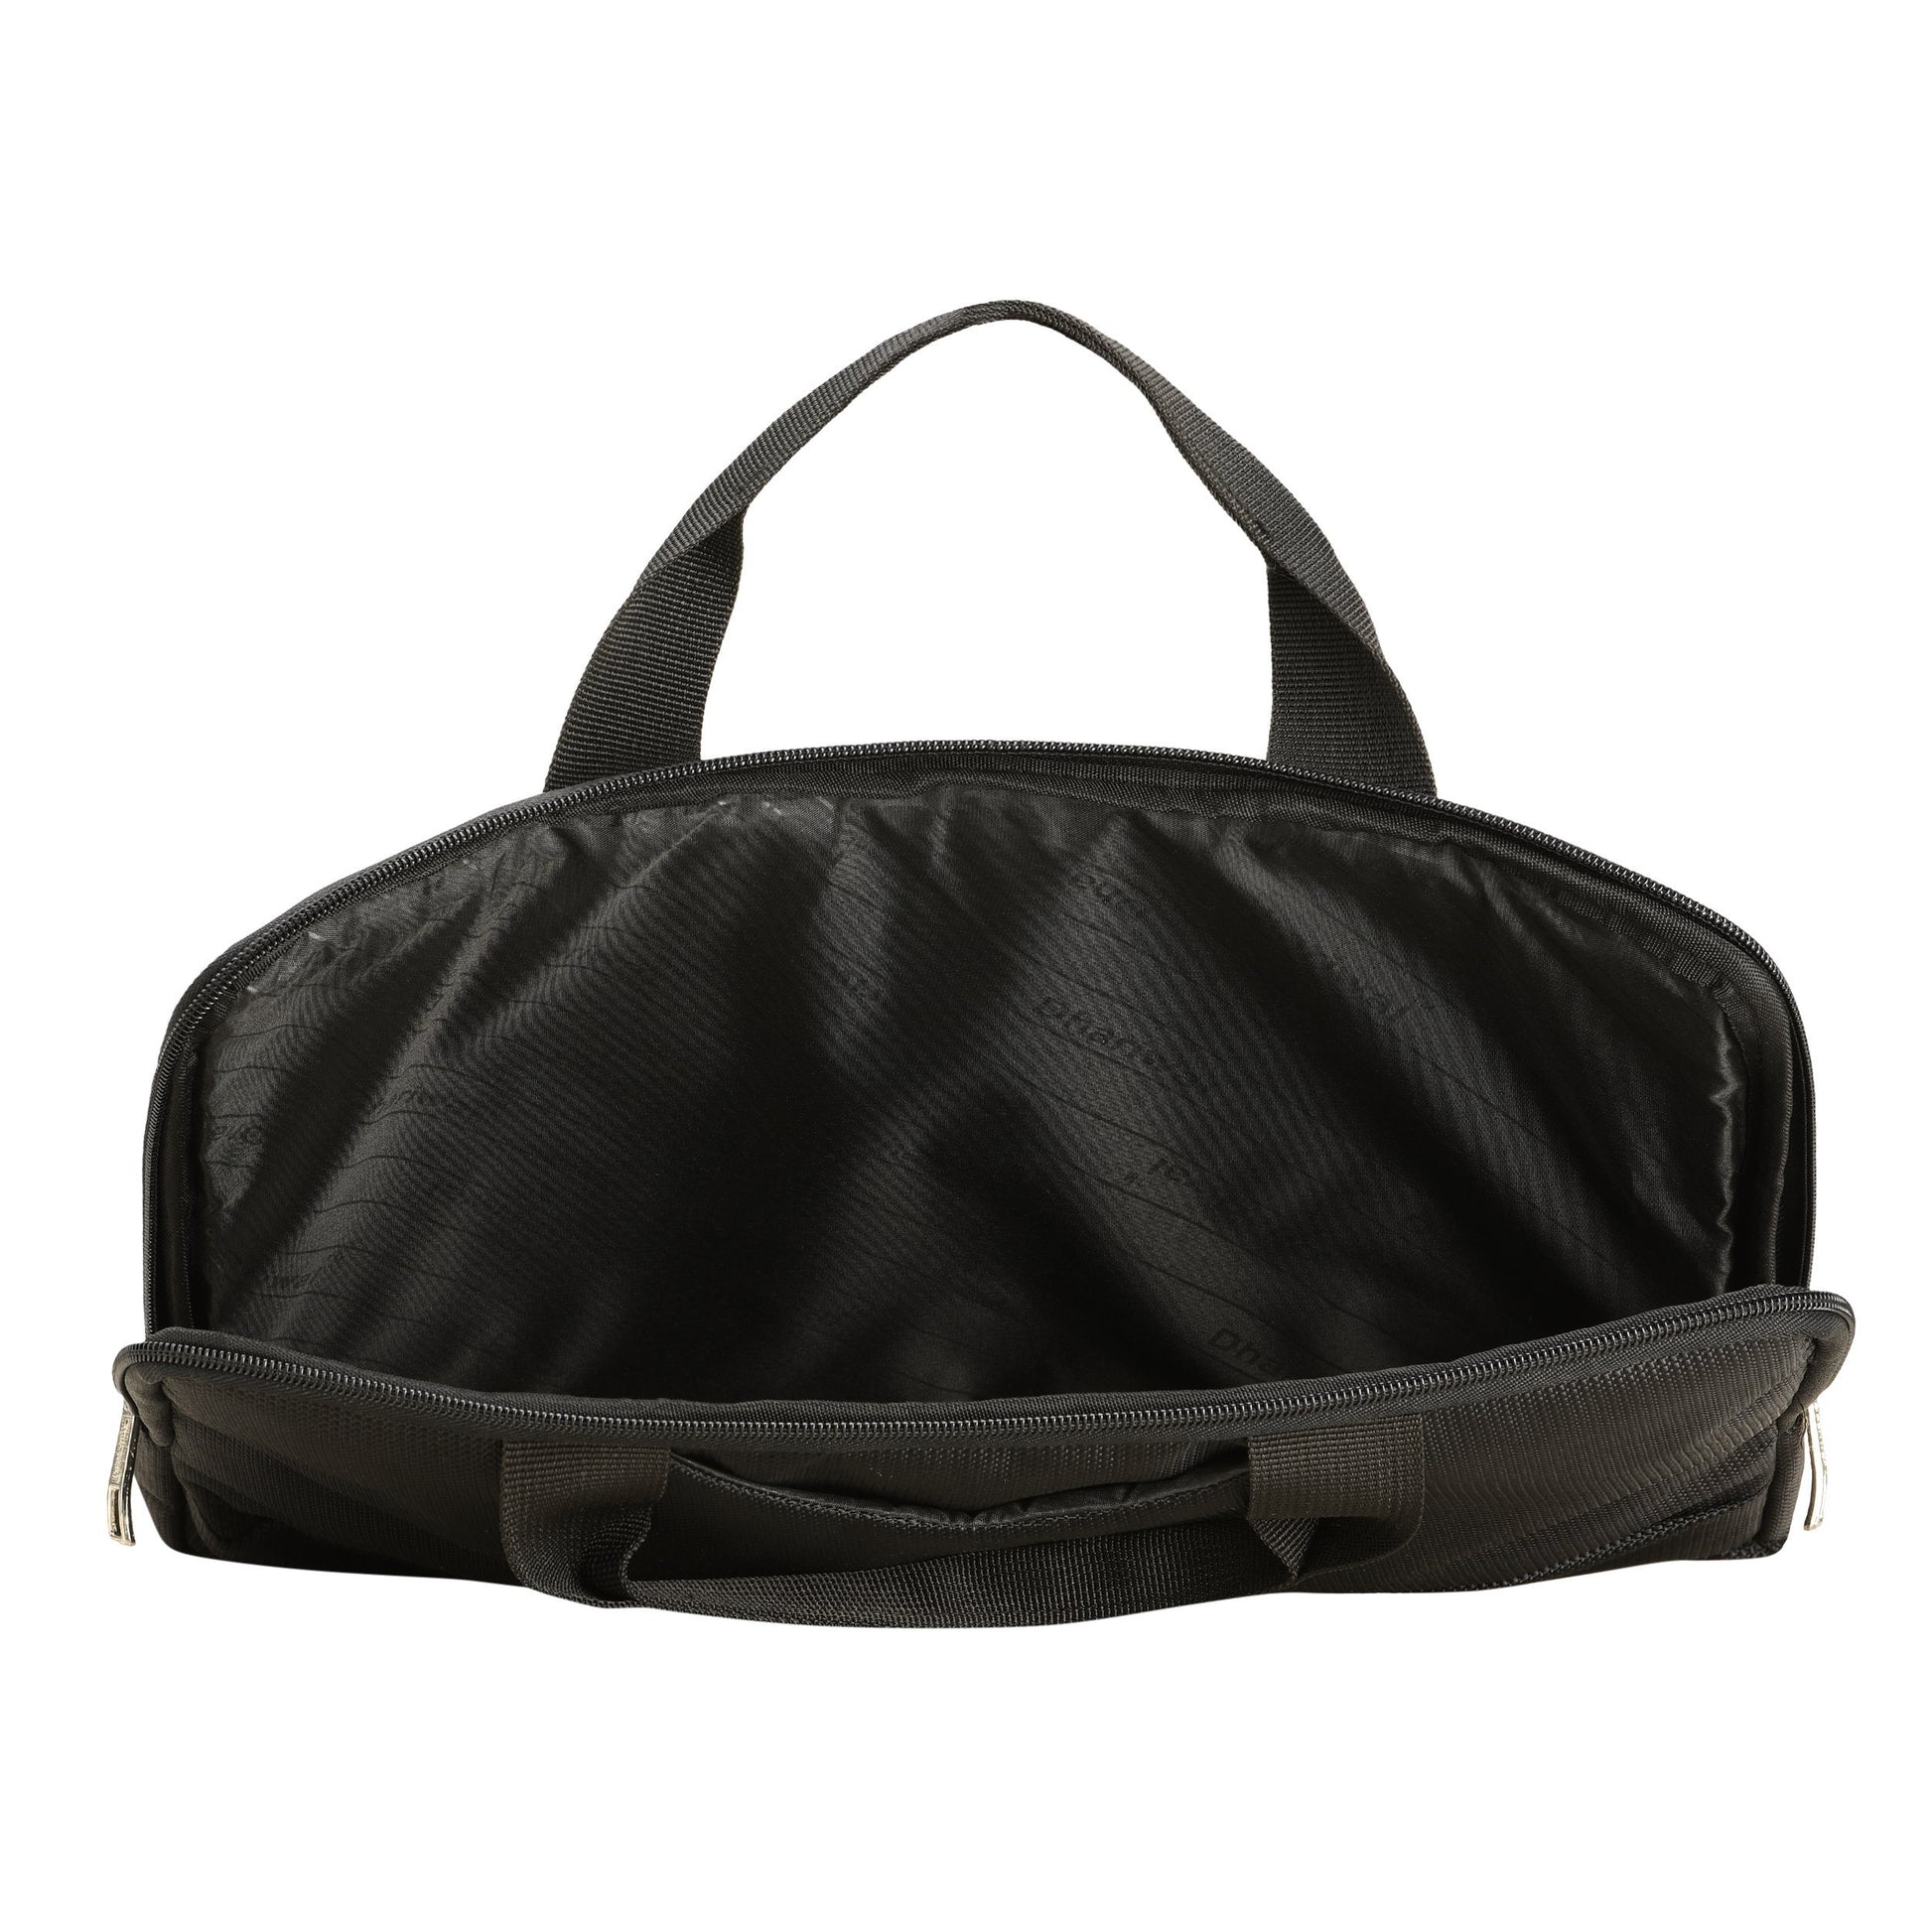 Dhariwal Laptop Bag Sleeve Messenger Bag for Laptop MacBook|Adjustable Strap, Pocket 1680 Matty 13|14|15.6|17.6 inches EB-609 Executive Bags Dhariwal 